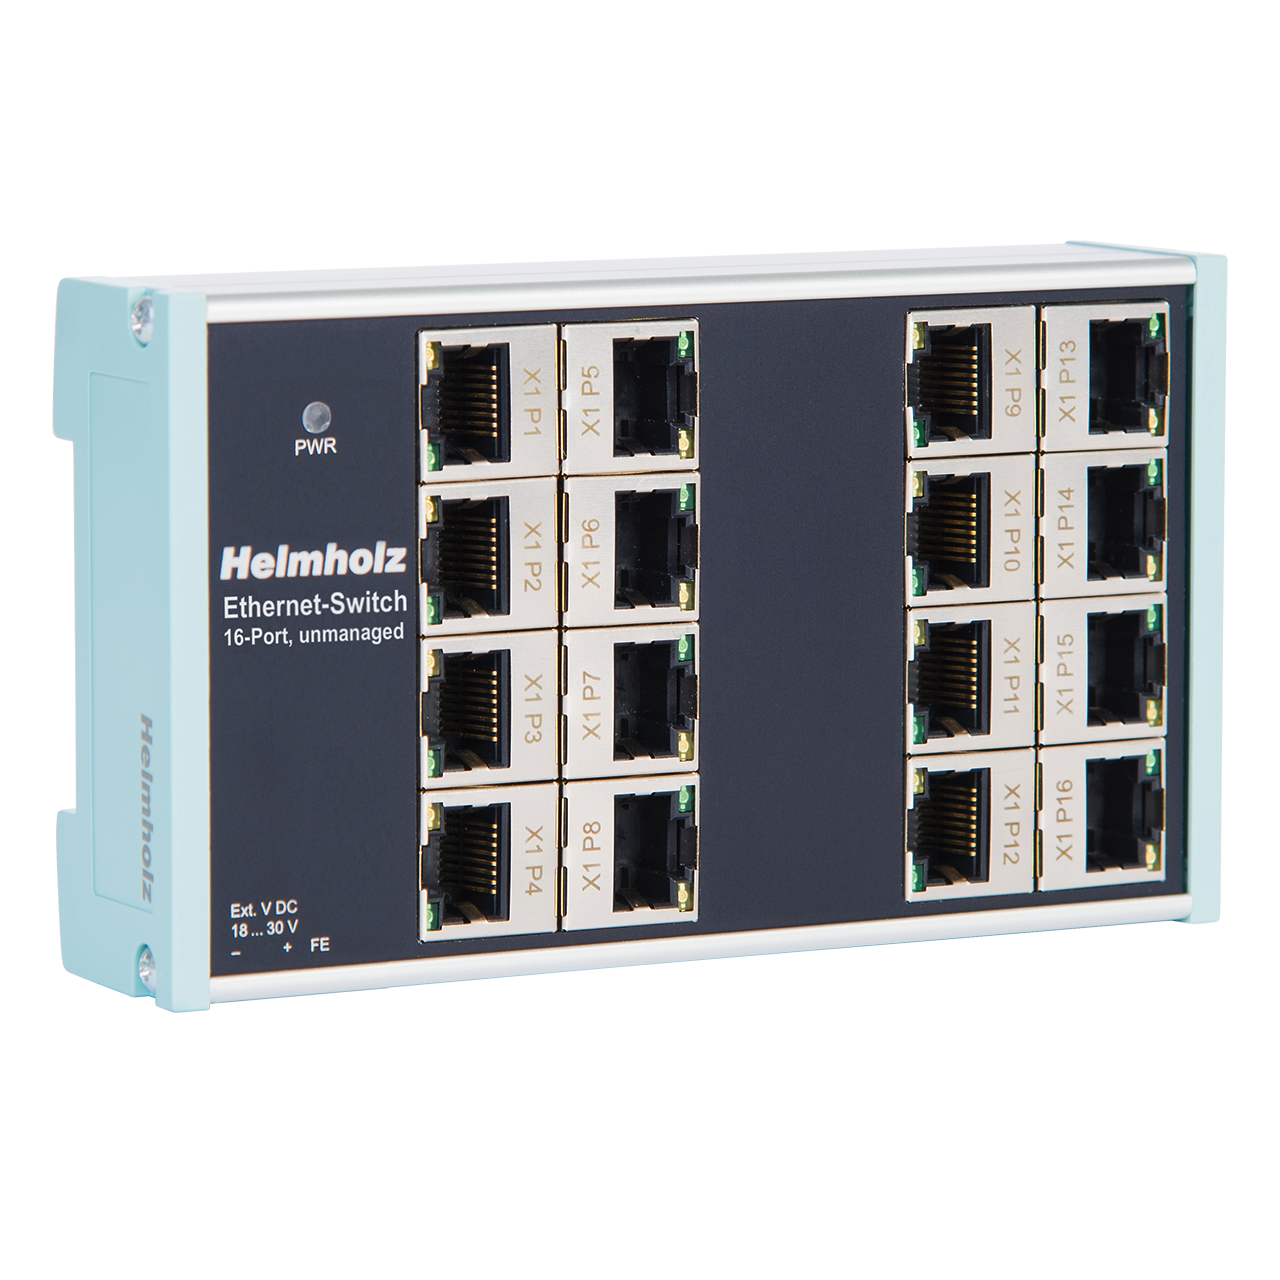 Helmholz Ethernet-Switch 16 puertos, no administrado, 10/100/1000 MBit montaje en riel DIN 700-841-16S01